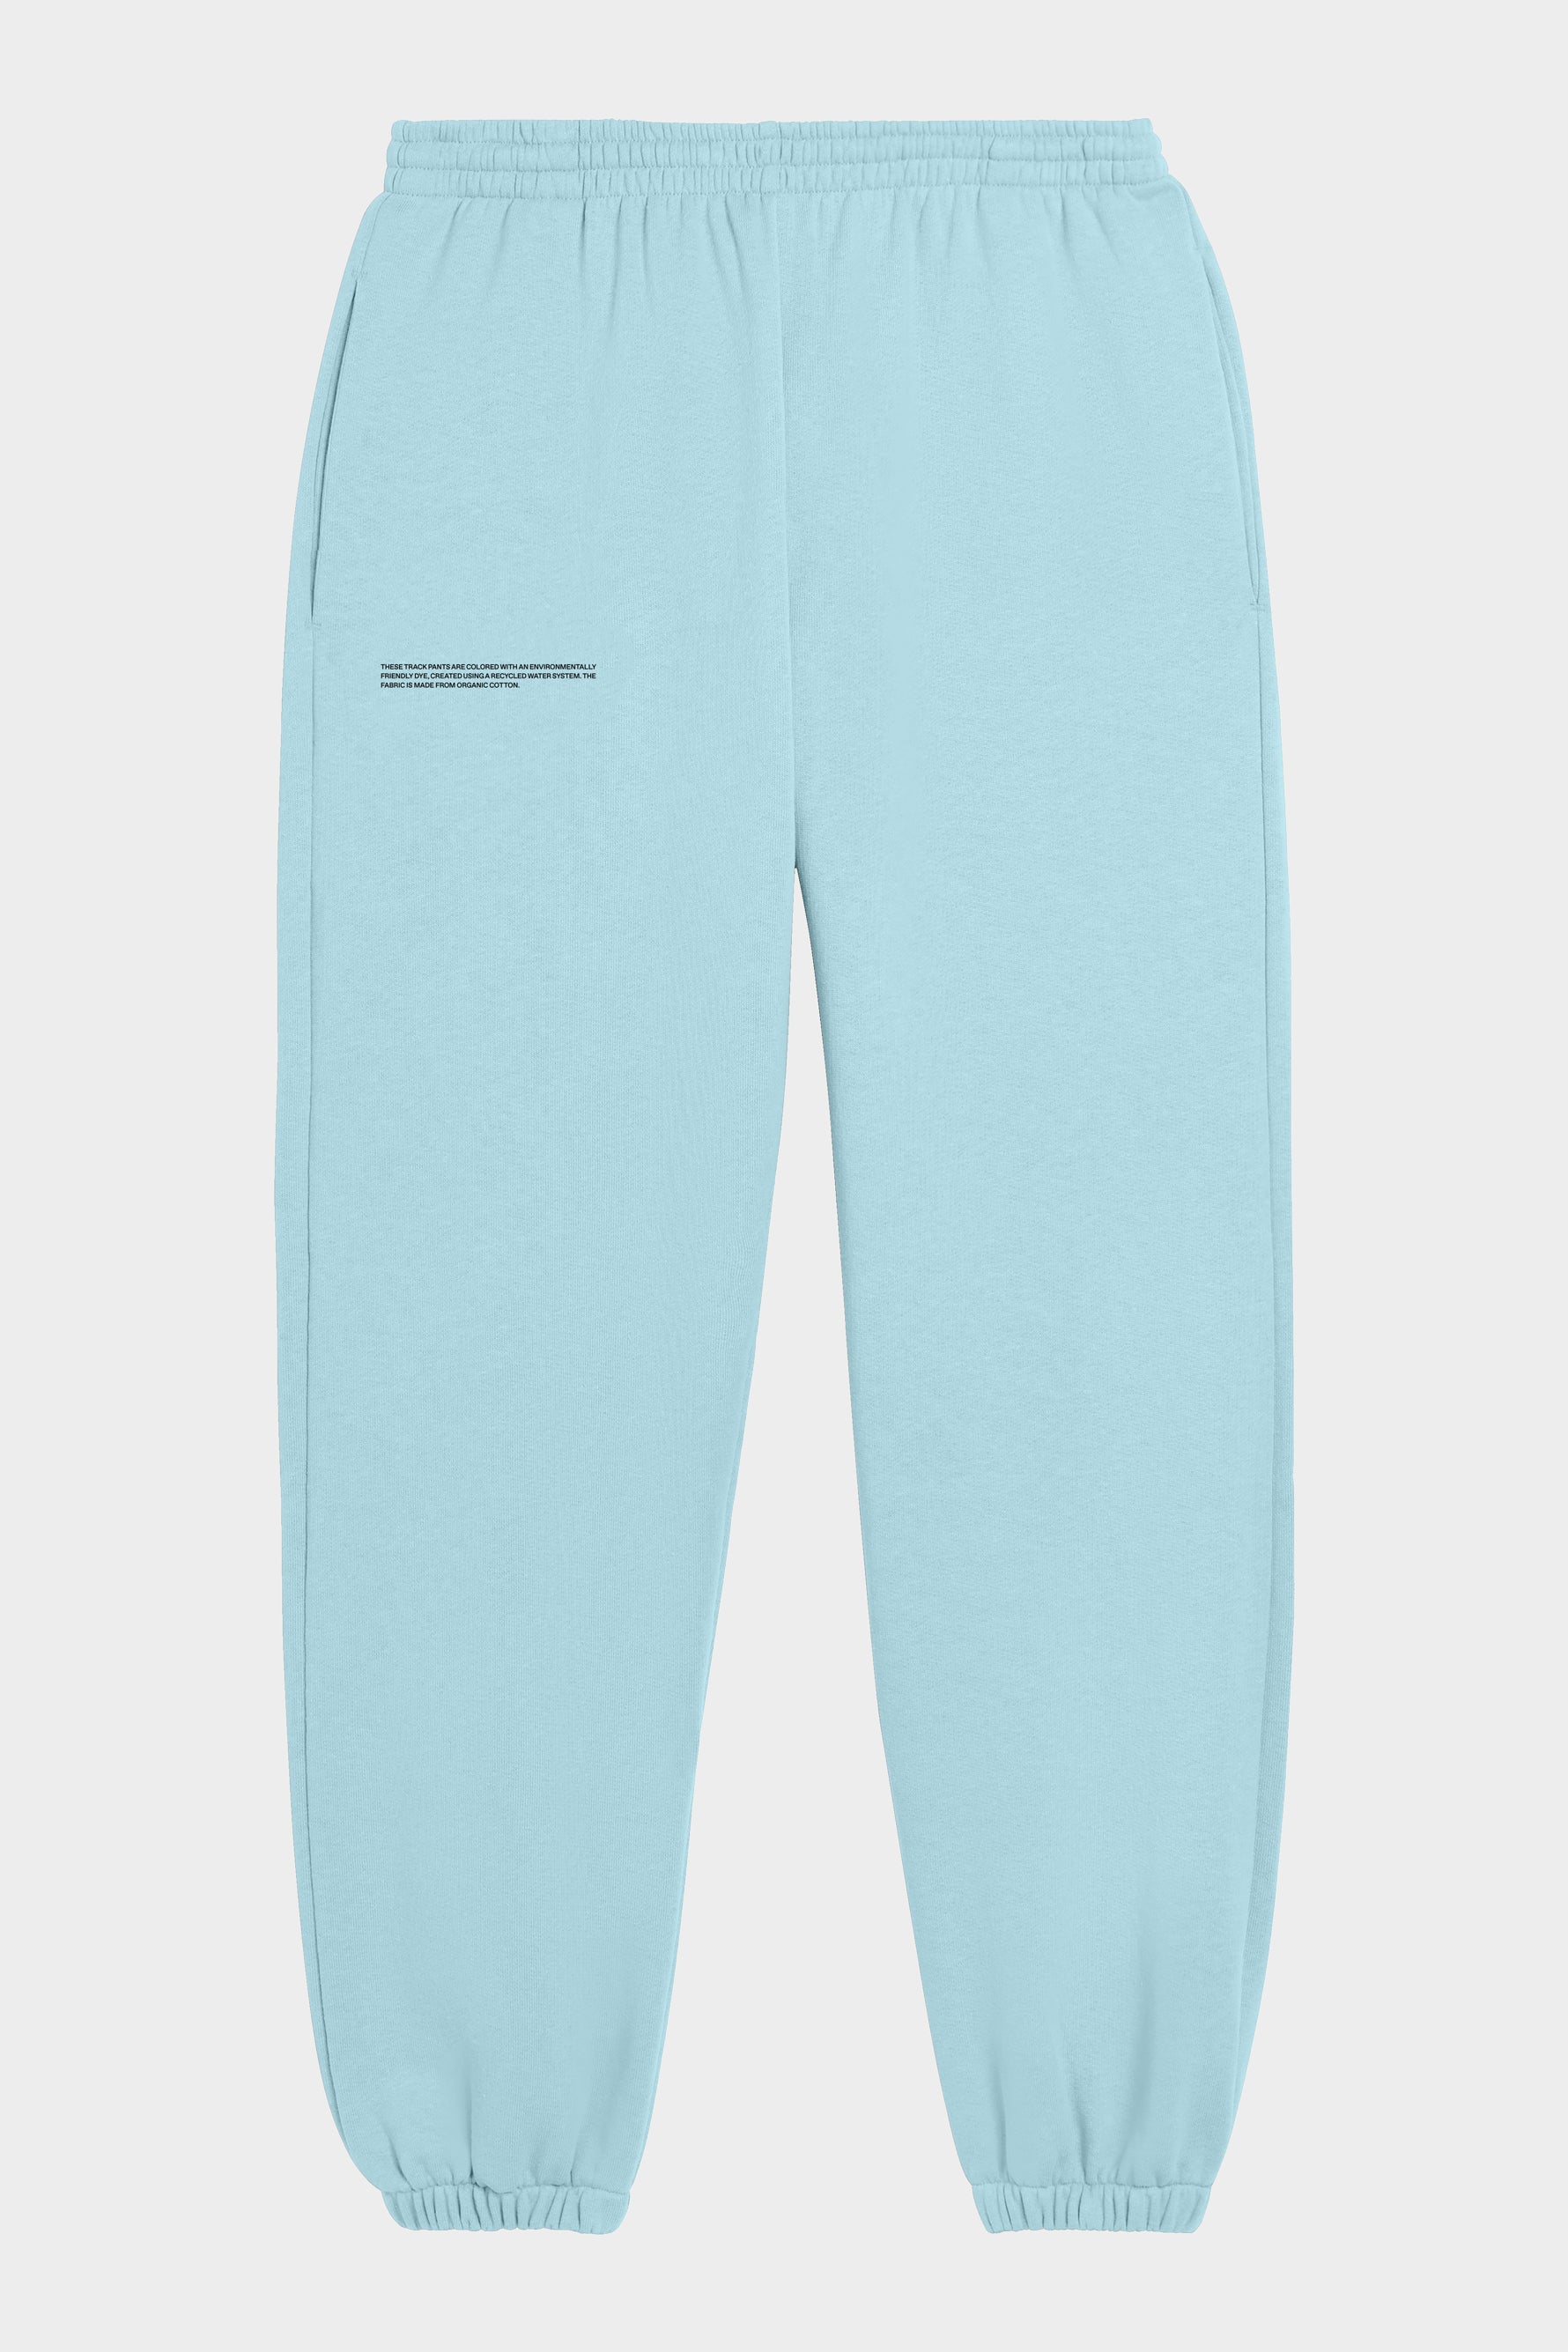 New Balance x Bandier Fleece Sweatpants Joggers Track Pants, Medium, Xenon  Blue